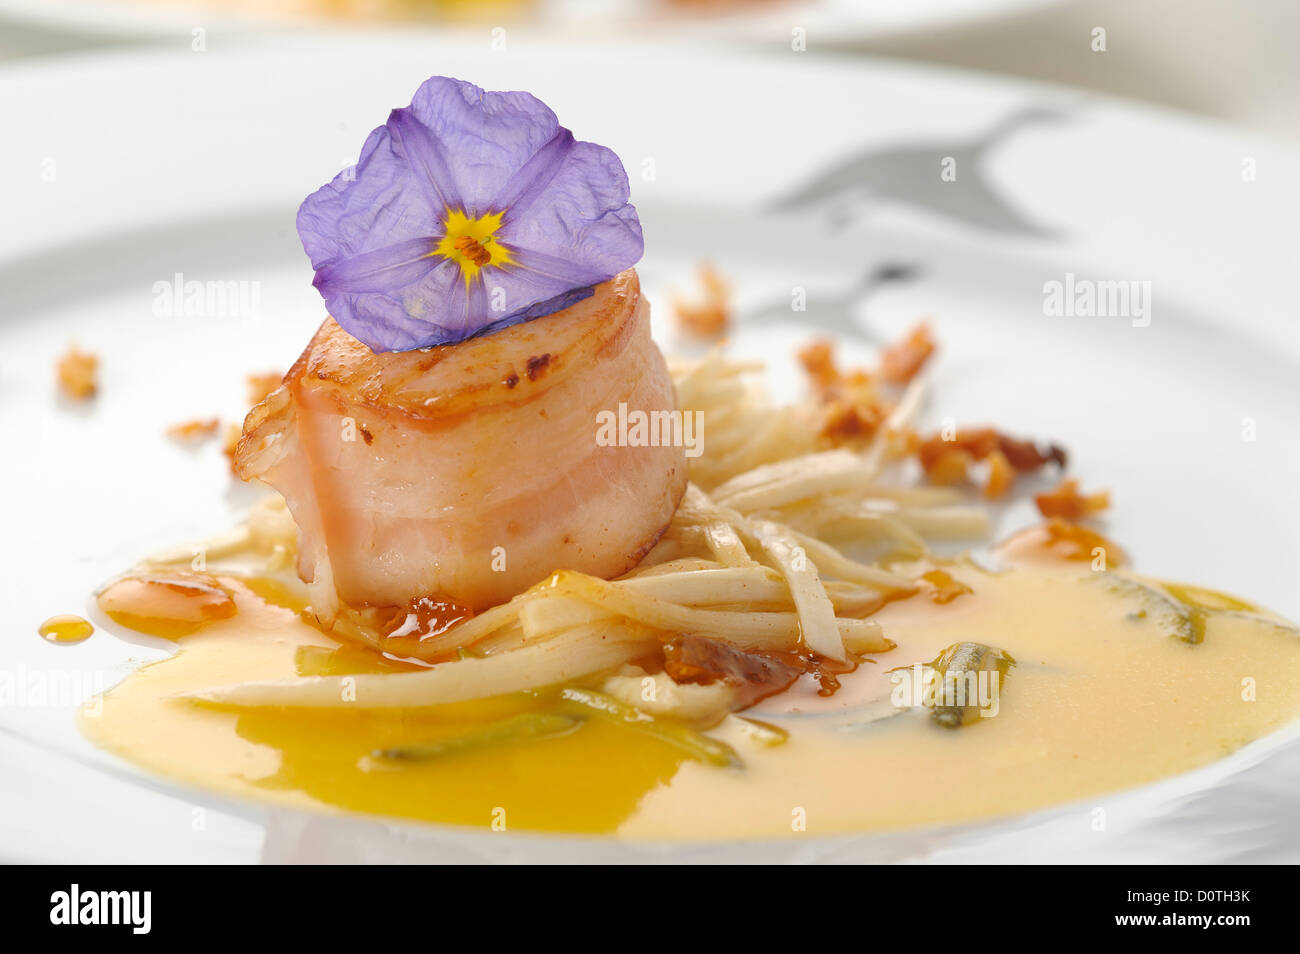 Gourmet food - seared sea scallops with bacon Stock Photo